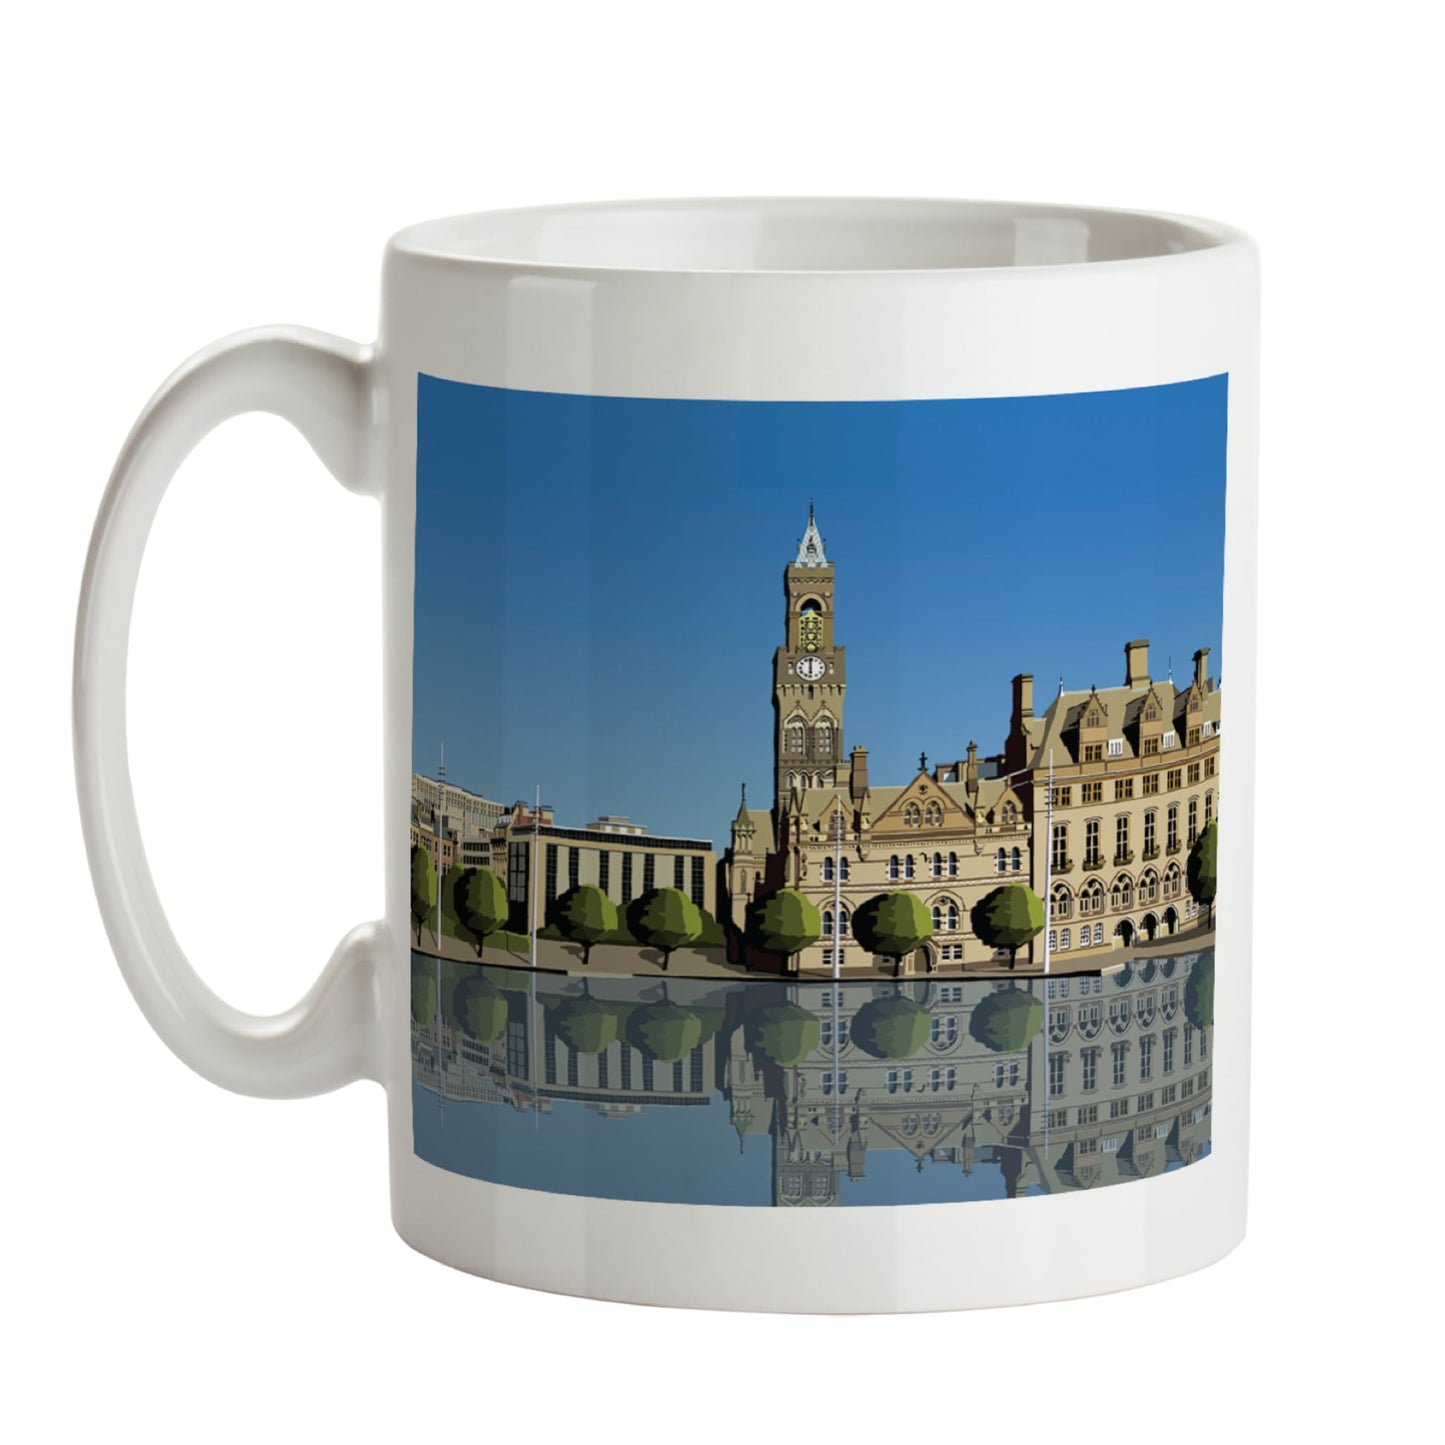 Bradford Mug - The Great Yorkshire Shop